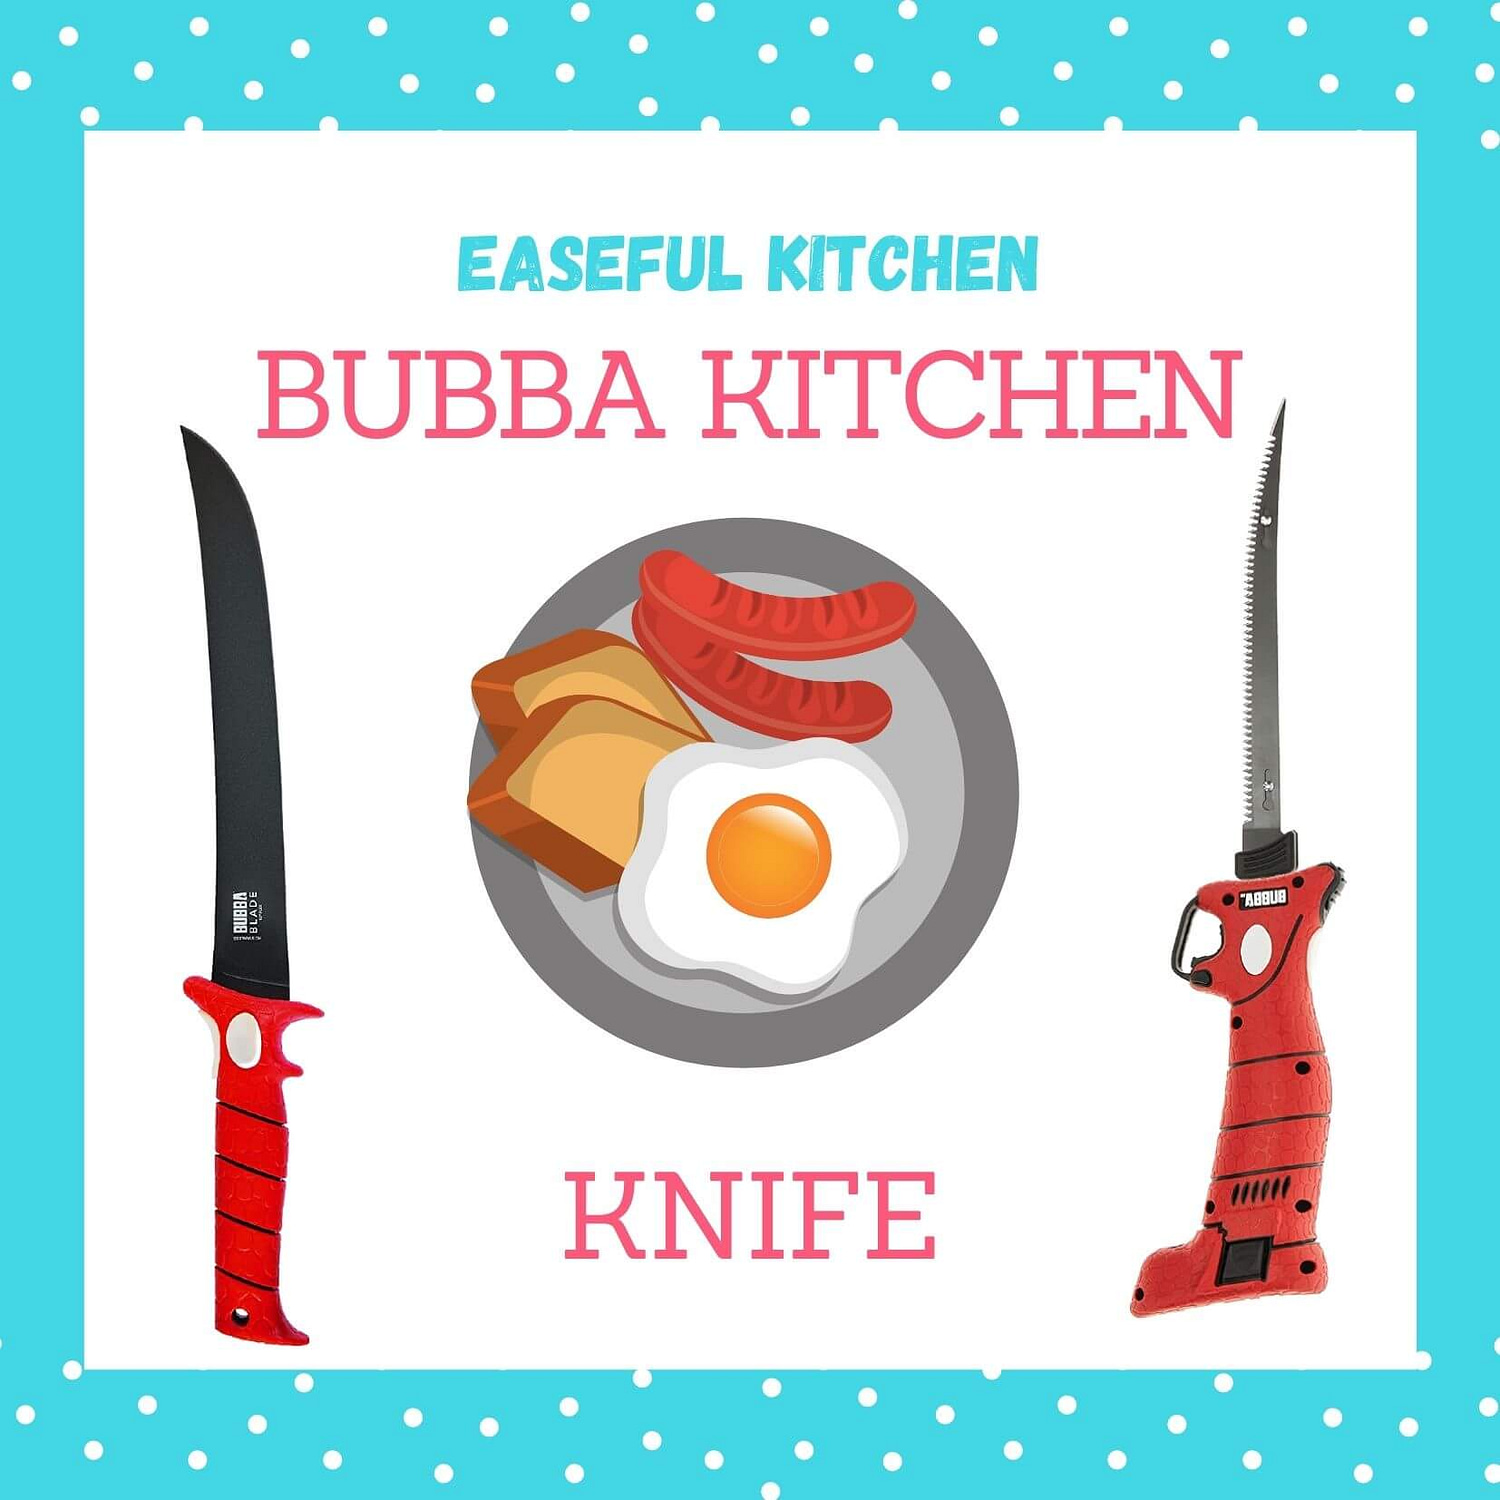 Bubba Knife Reviews